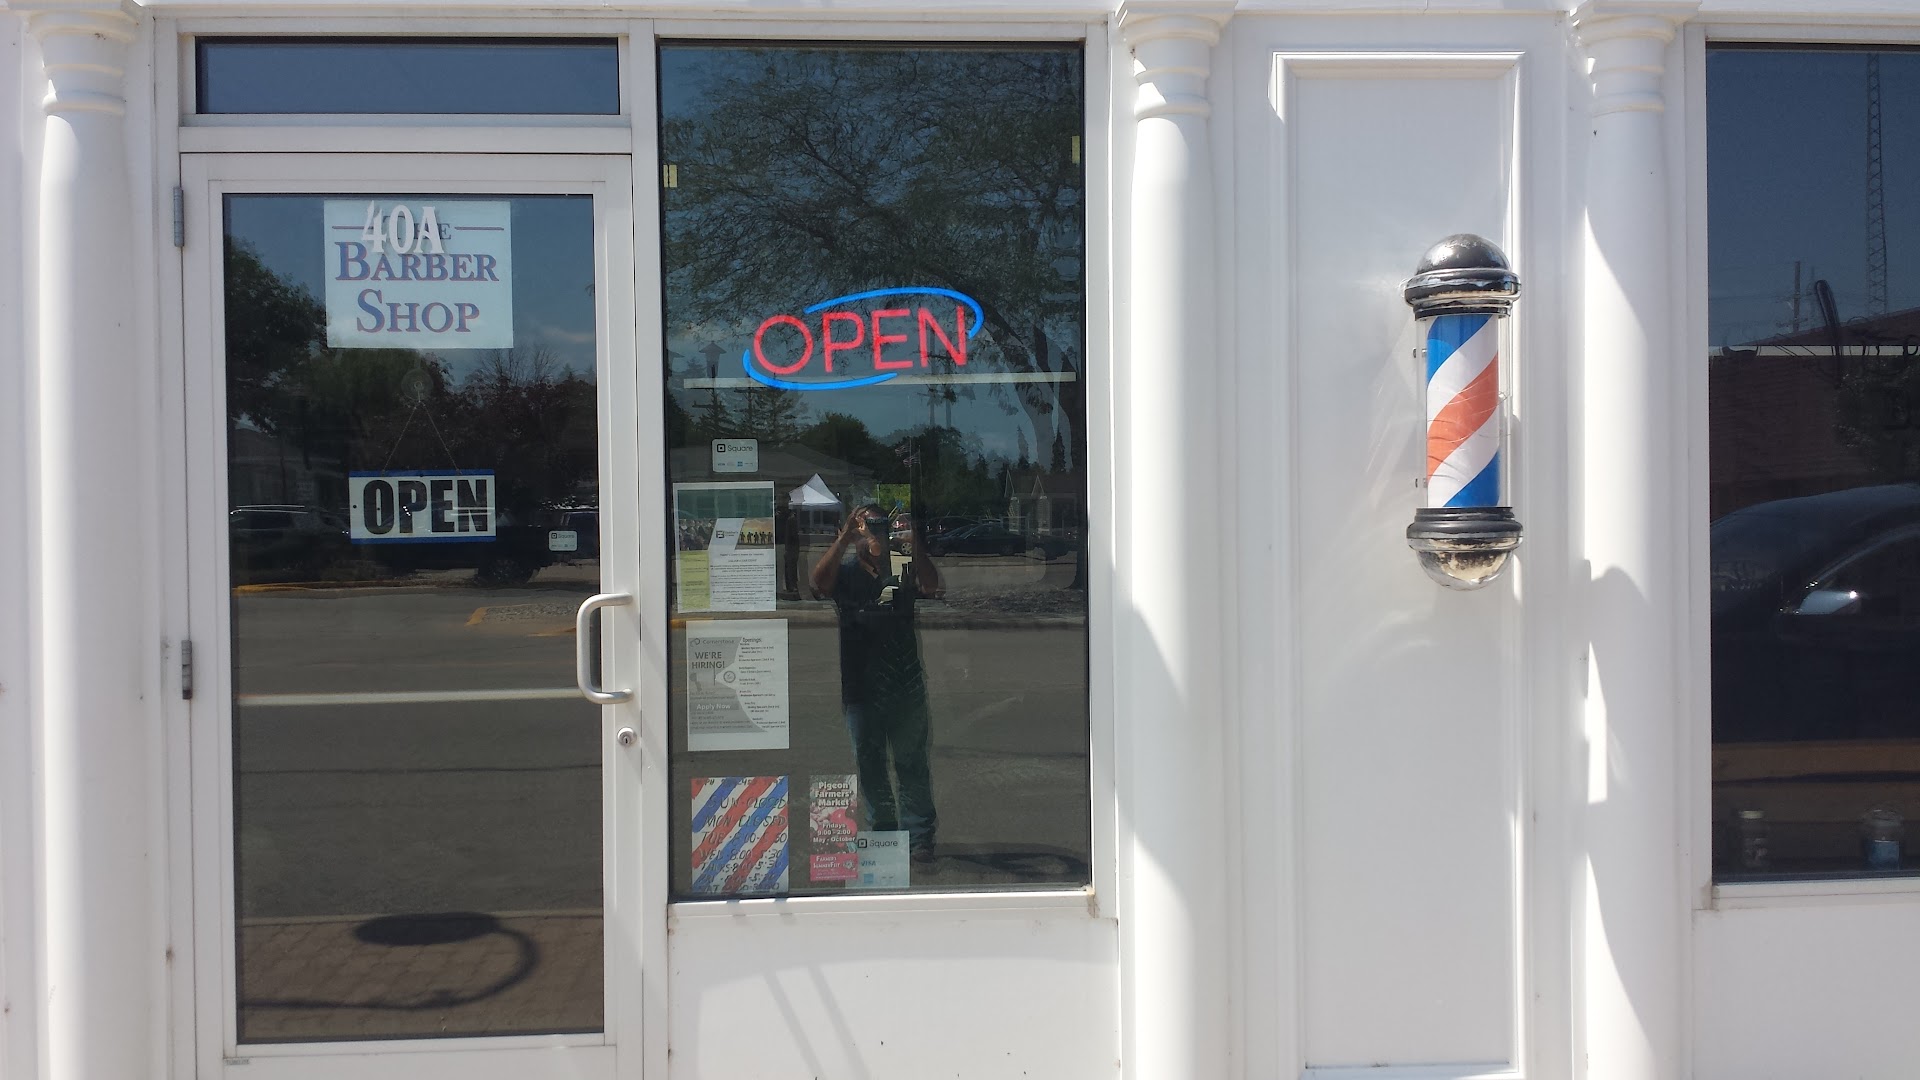 The BarberShop